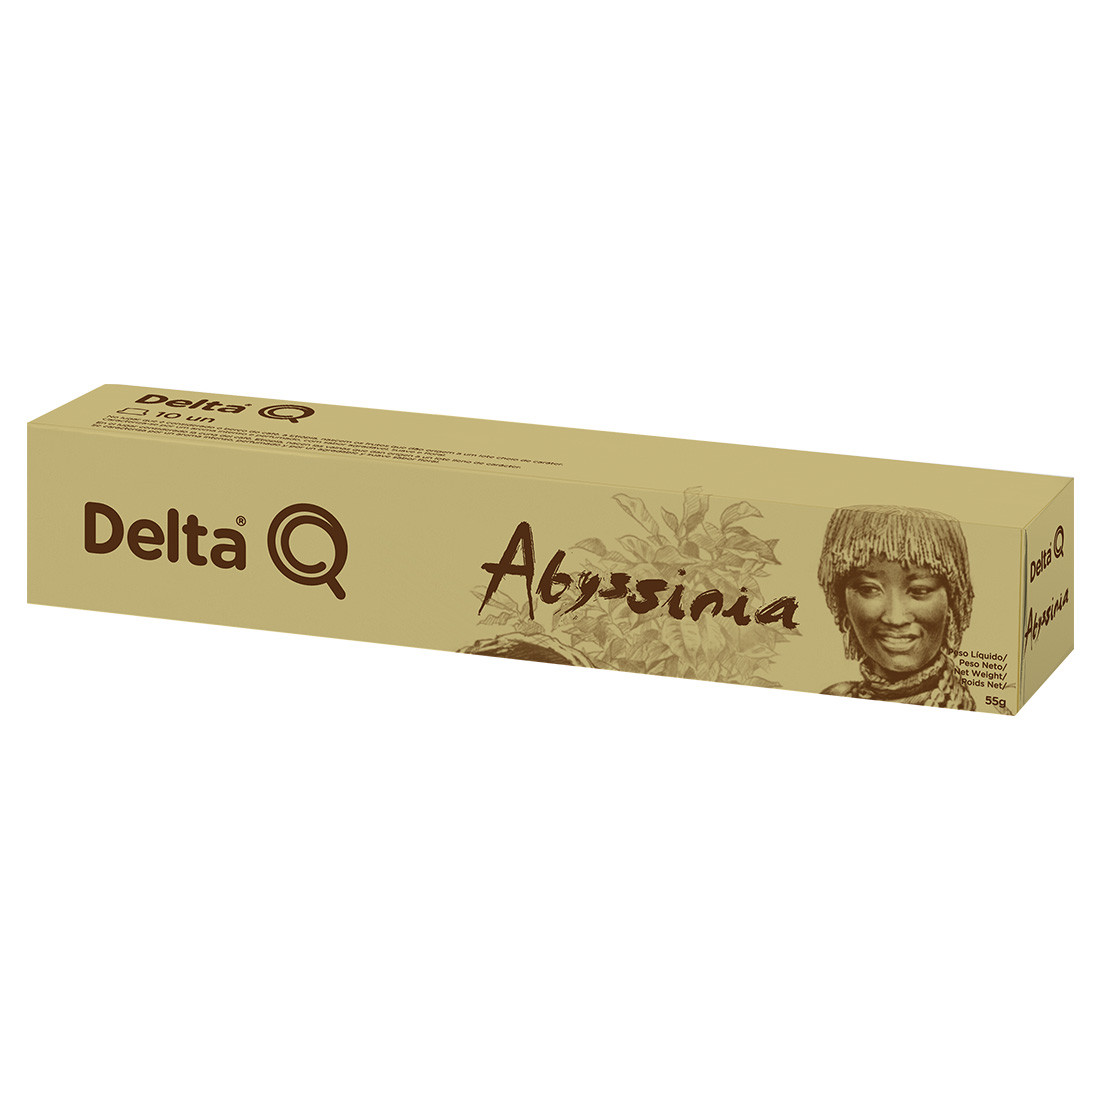 Delta Q - Abyssinia